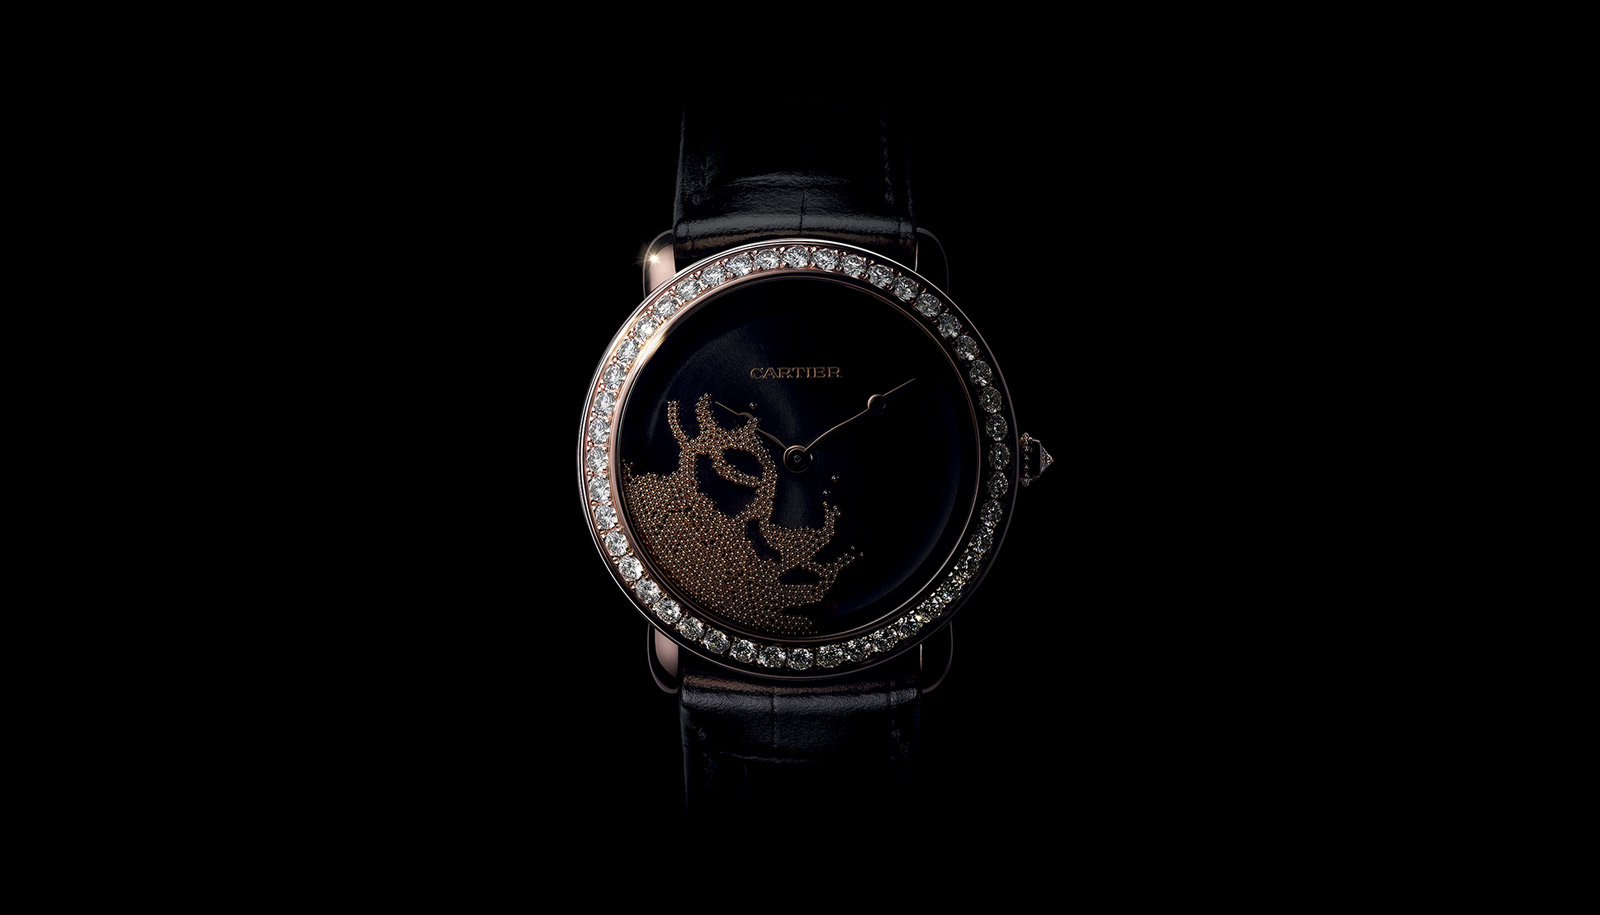 Cartier 'Révélation d’une Panthère' watch with gold beads and diamond bezel in black